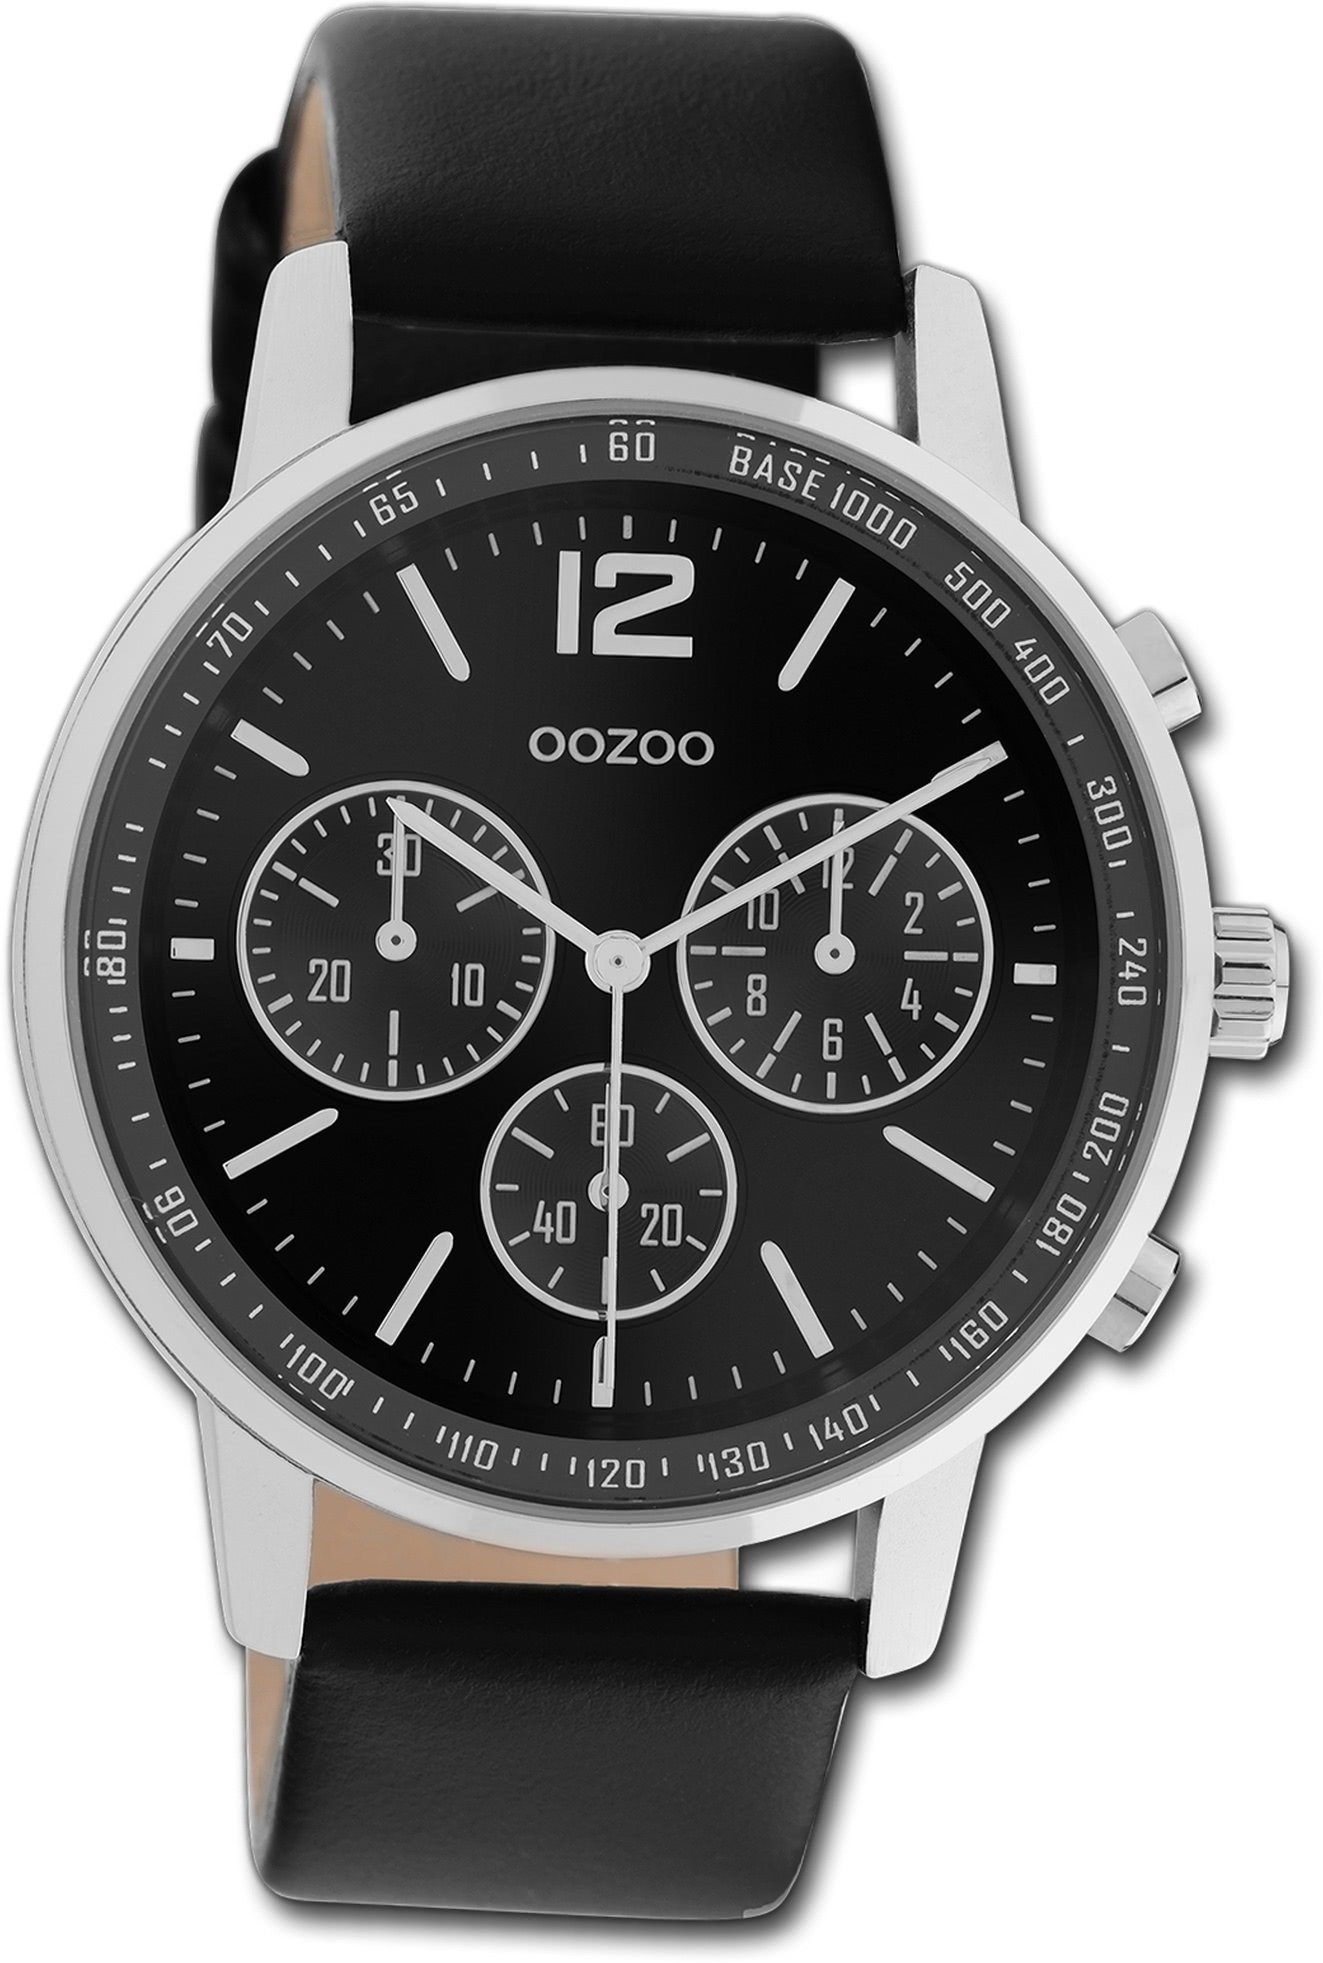 Quarzuhr Lederarmband (ca. Herren Timepieces, rundes Gehäuse, schwarz, Oozoo groß 42mm) Armbanduhr OOZOO Herrenuhr